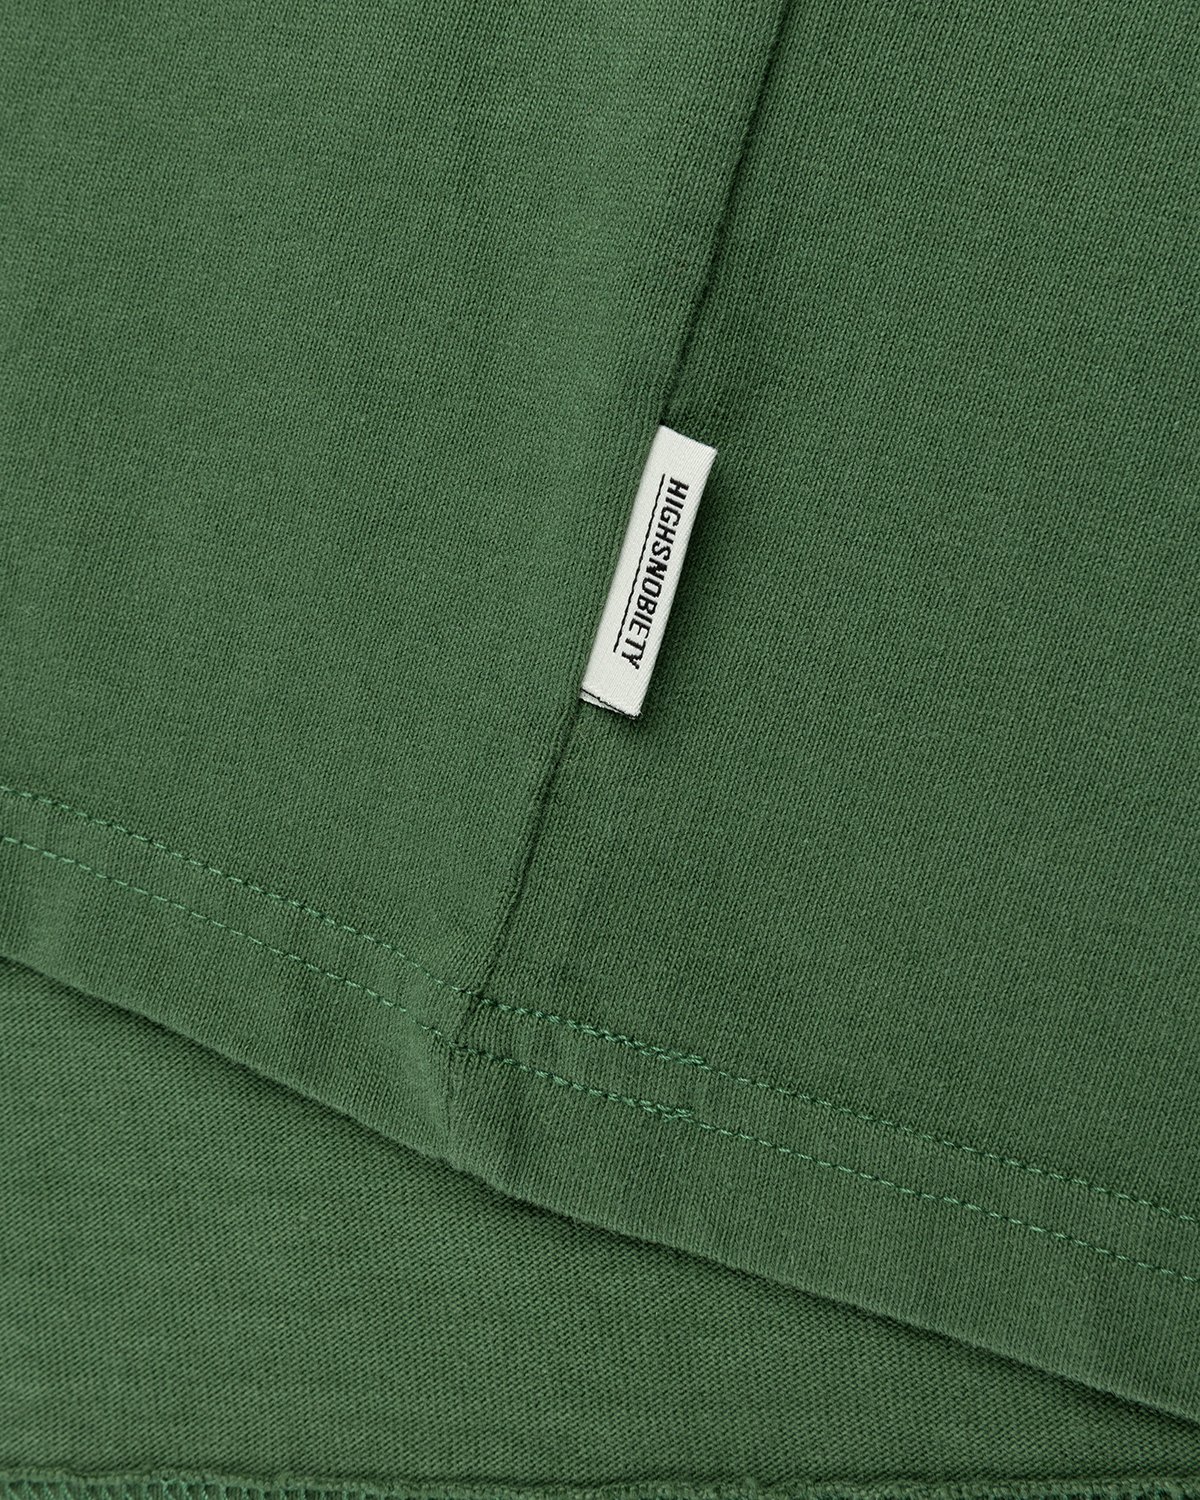 Highsnobiety - Heavy Staples Turtleneck Green - Clothing - Green - Image 4